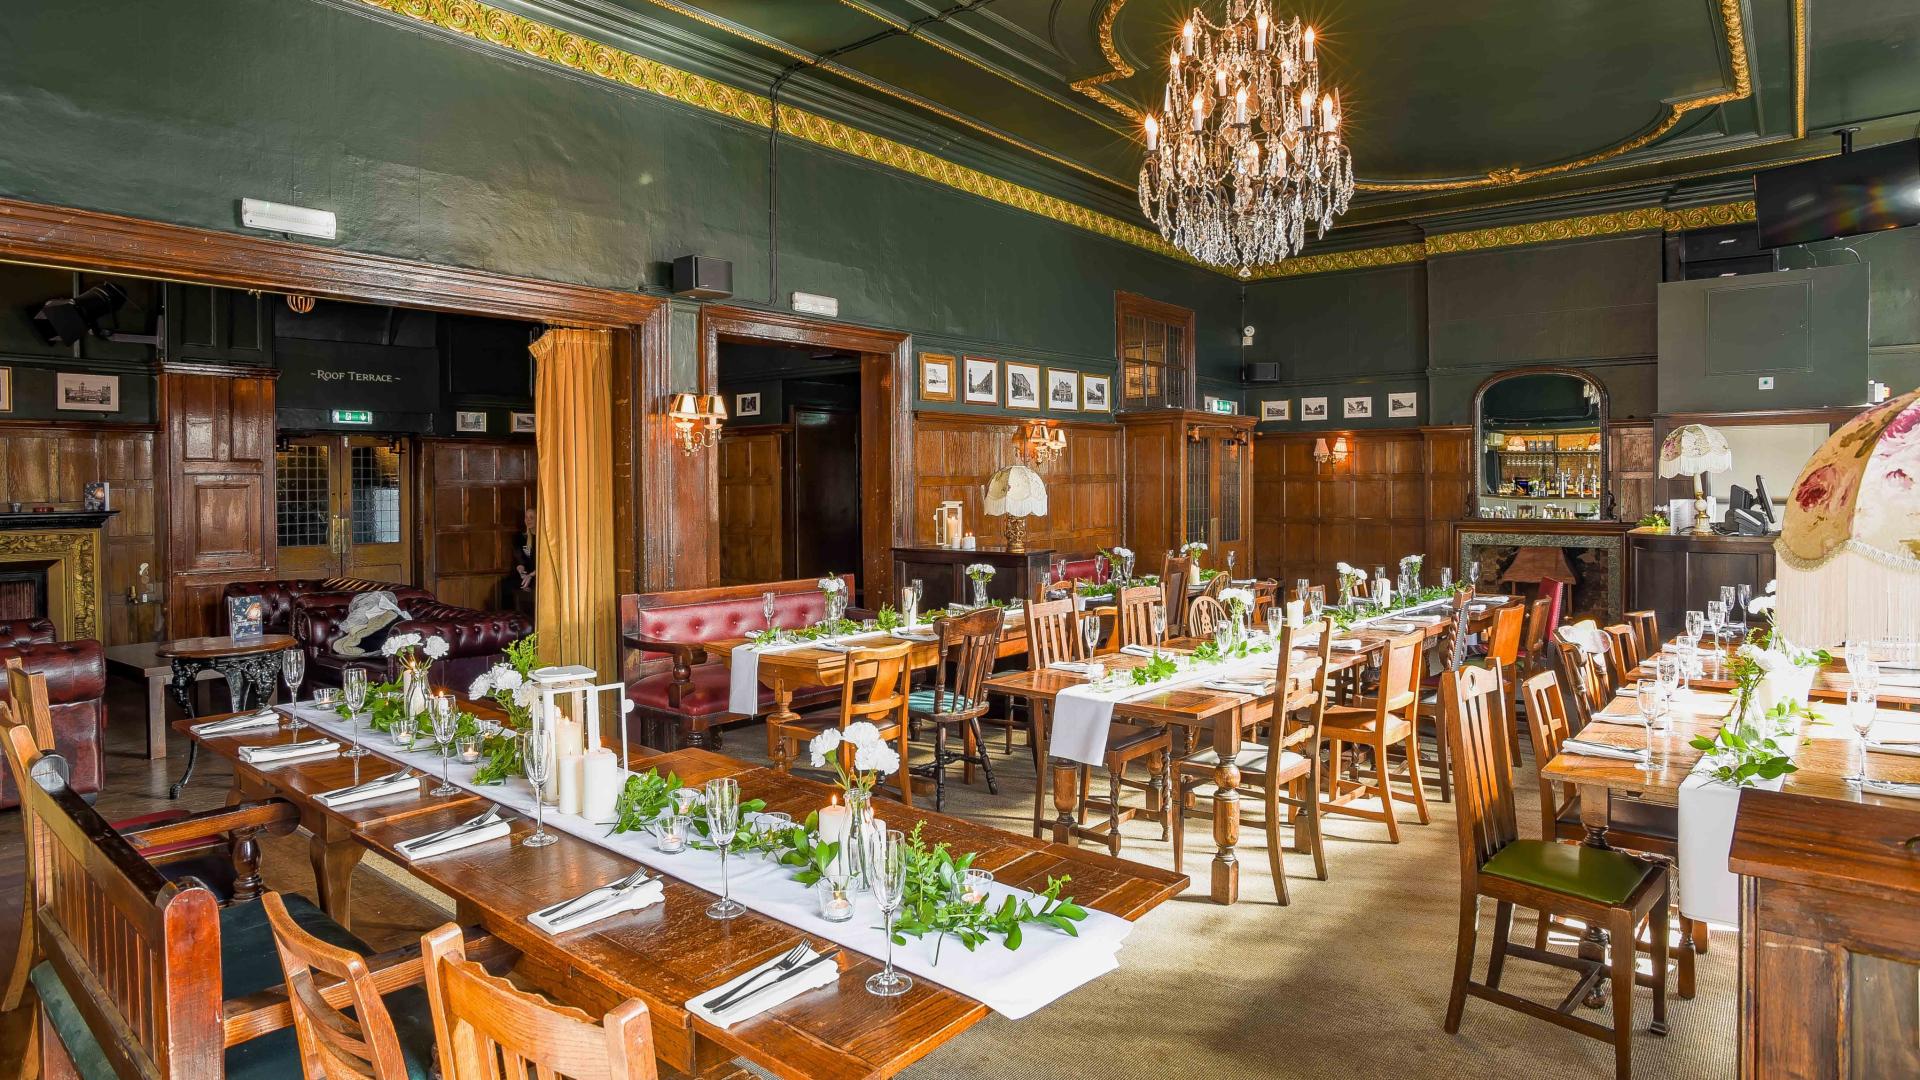 Find your Wedding Restaurant Venue in London